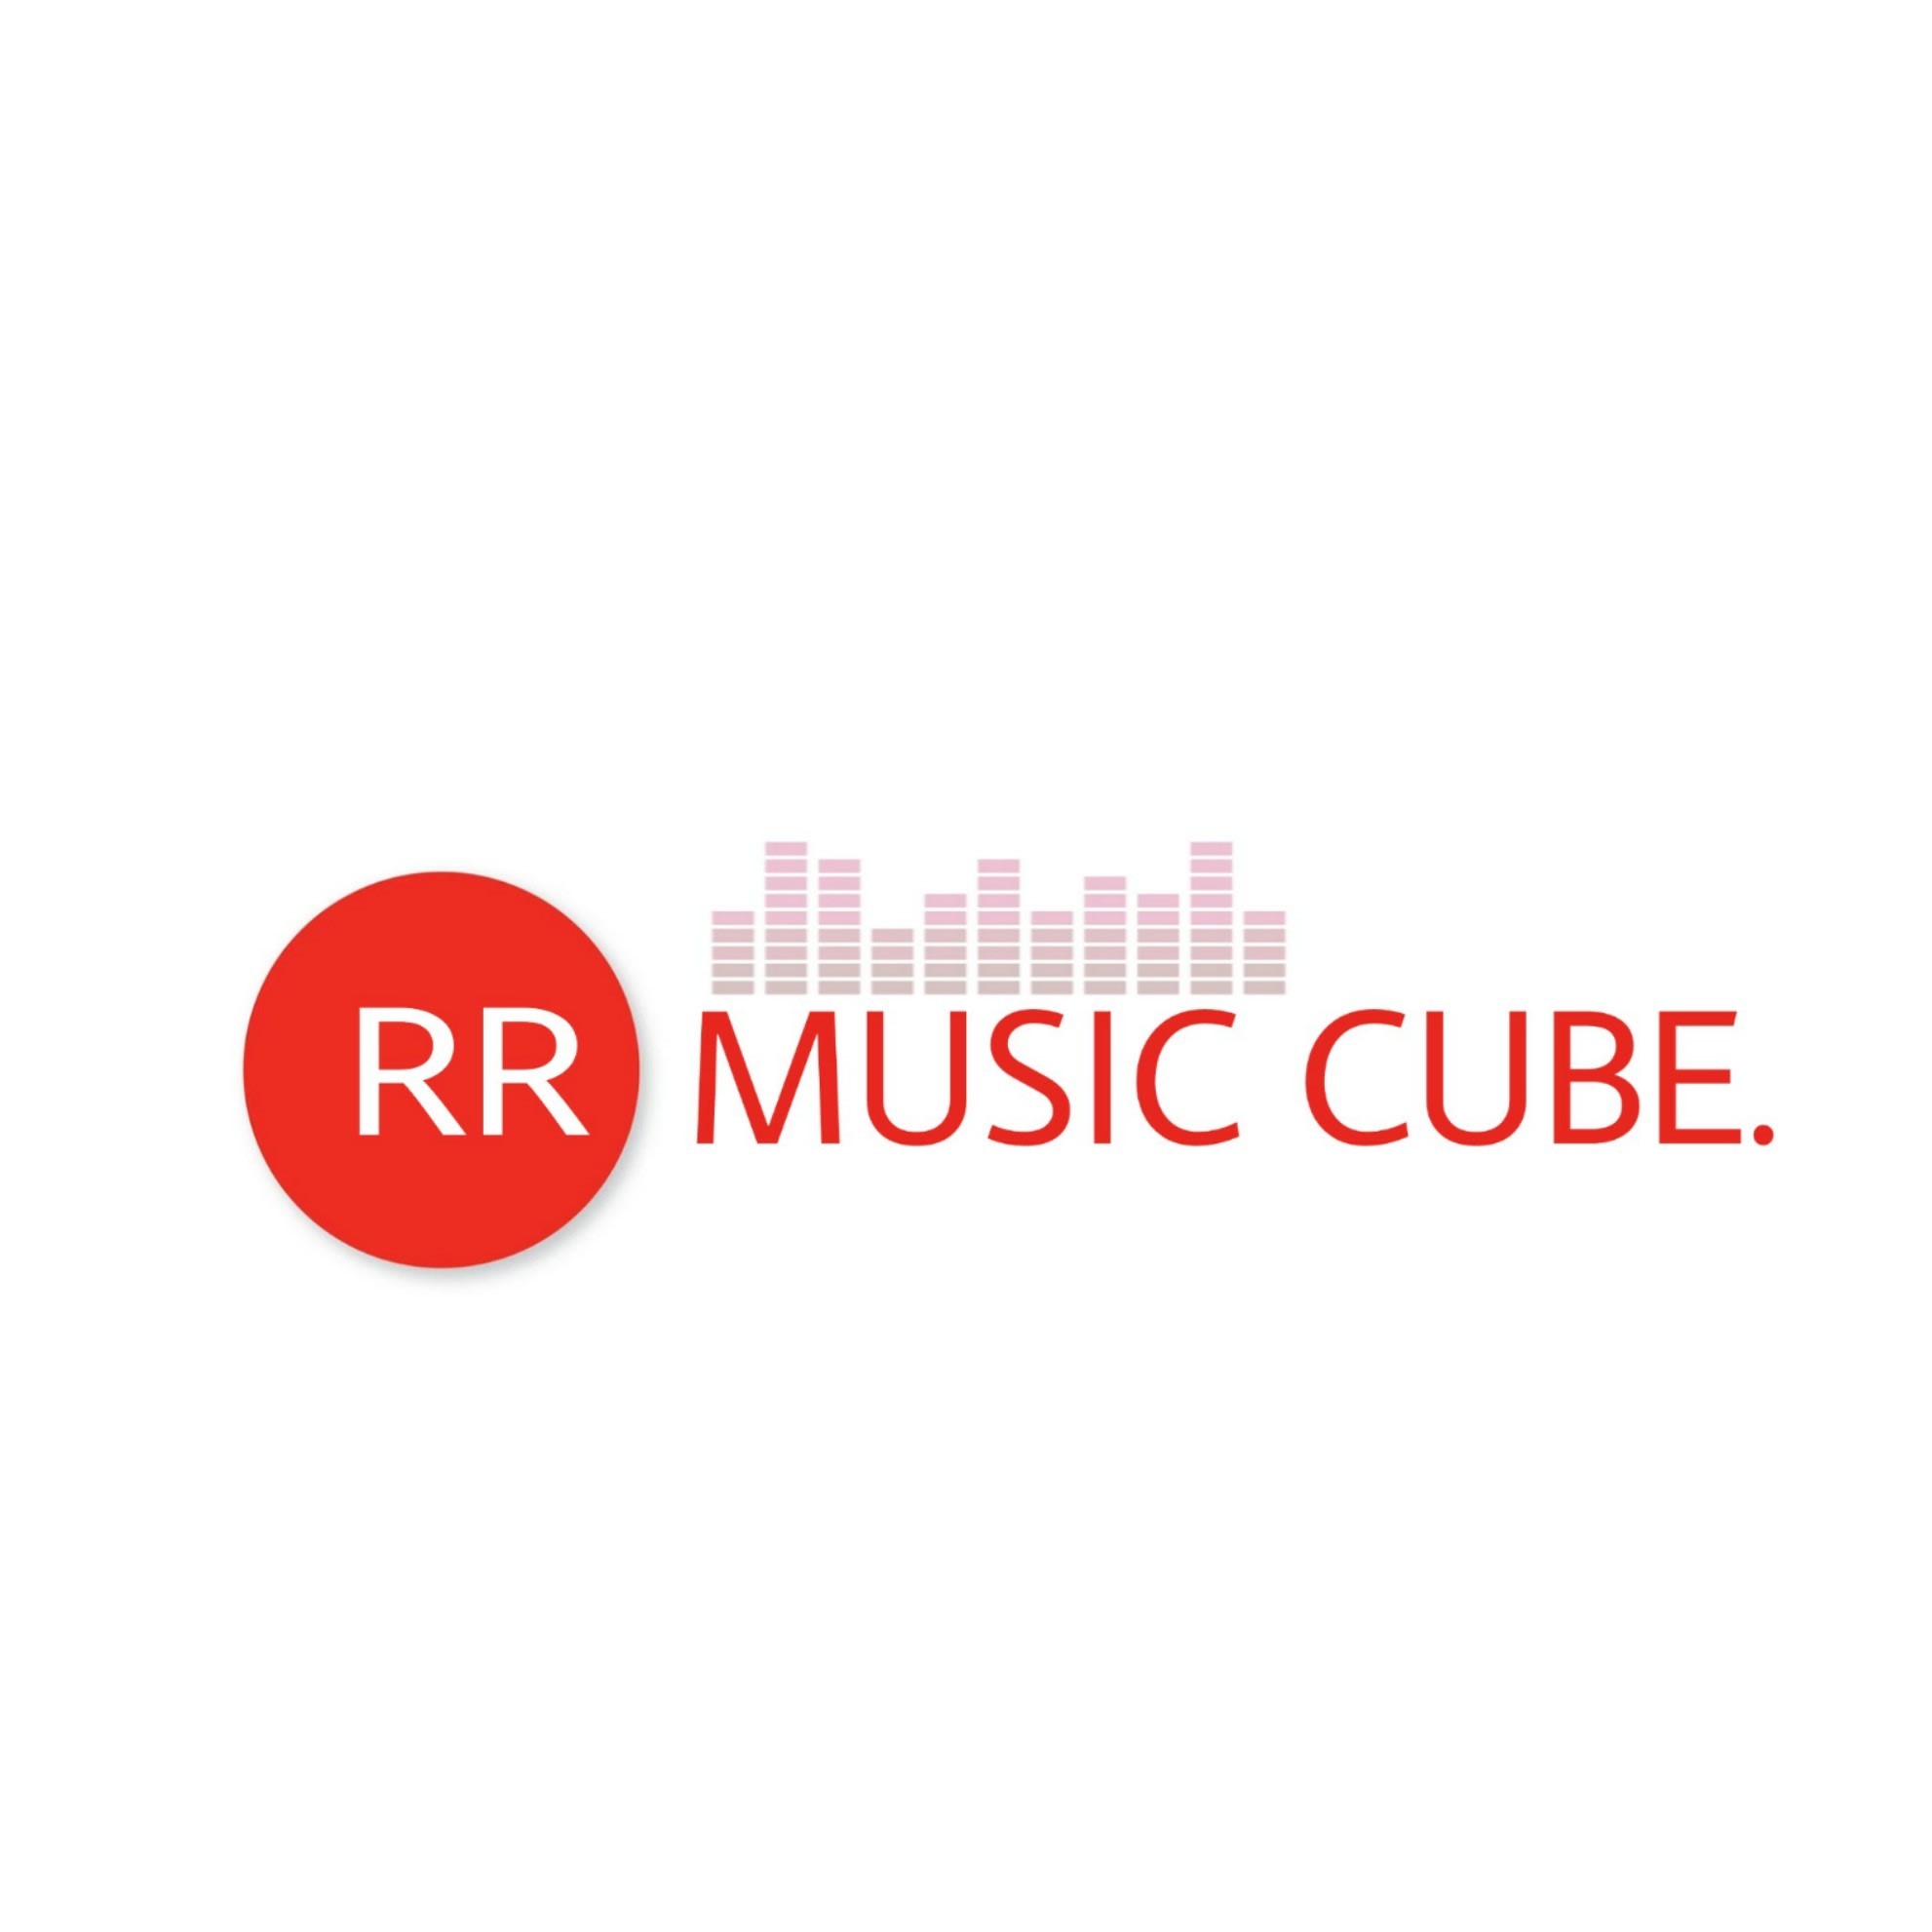 RR MUSIC CUBE